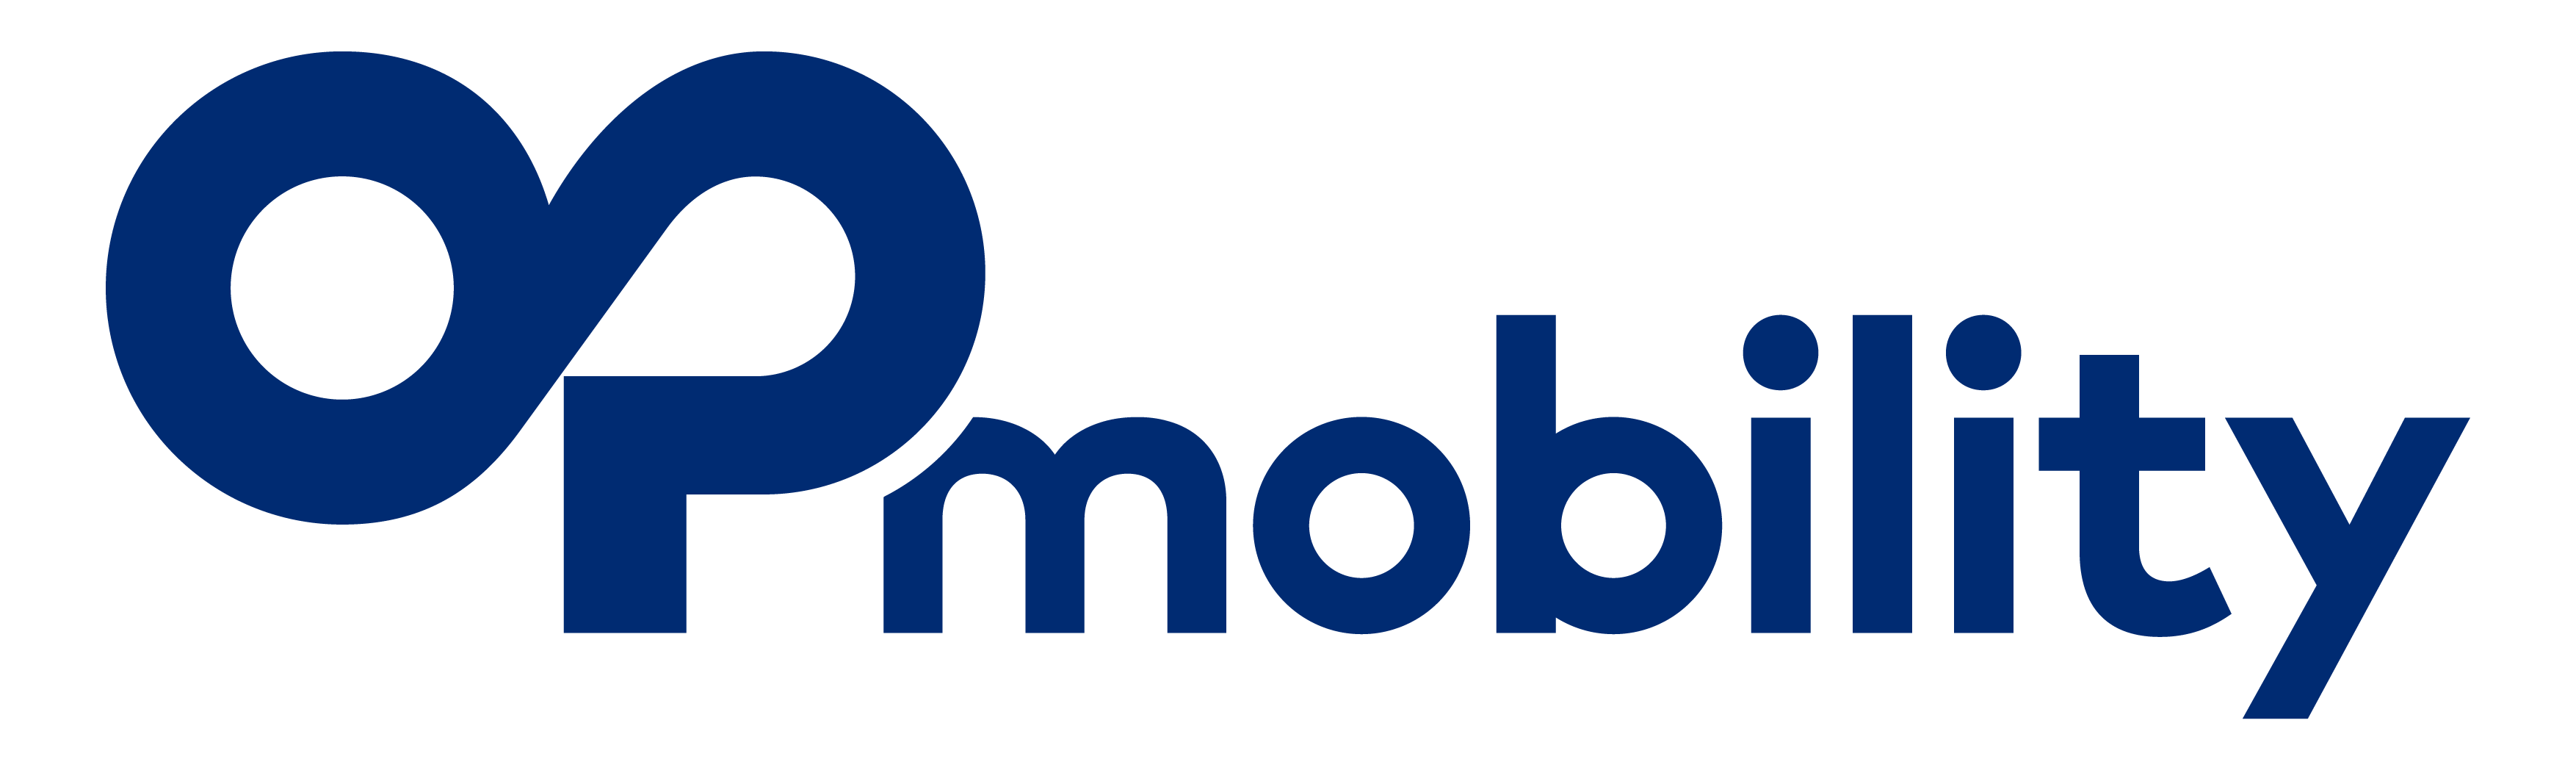 OP Mobility  - Logo